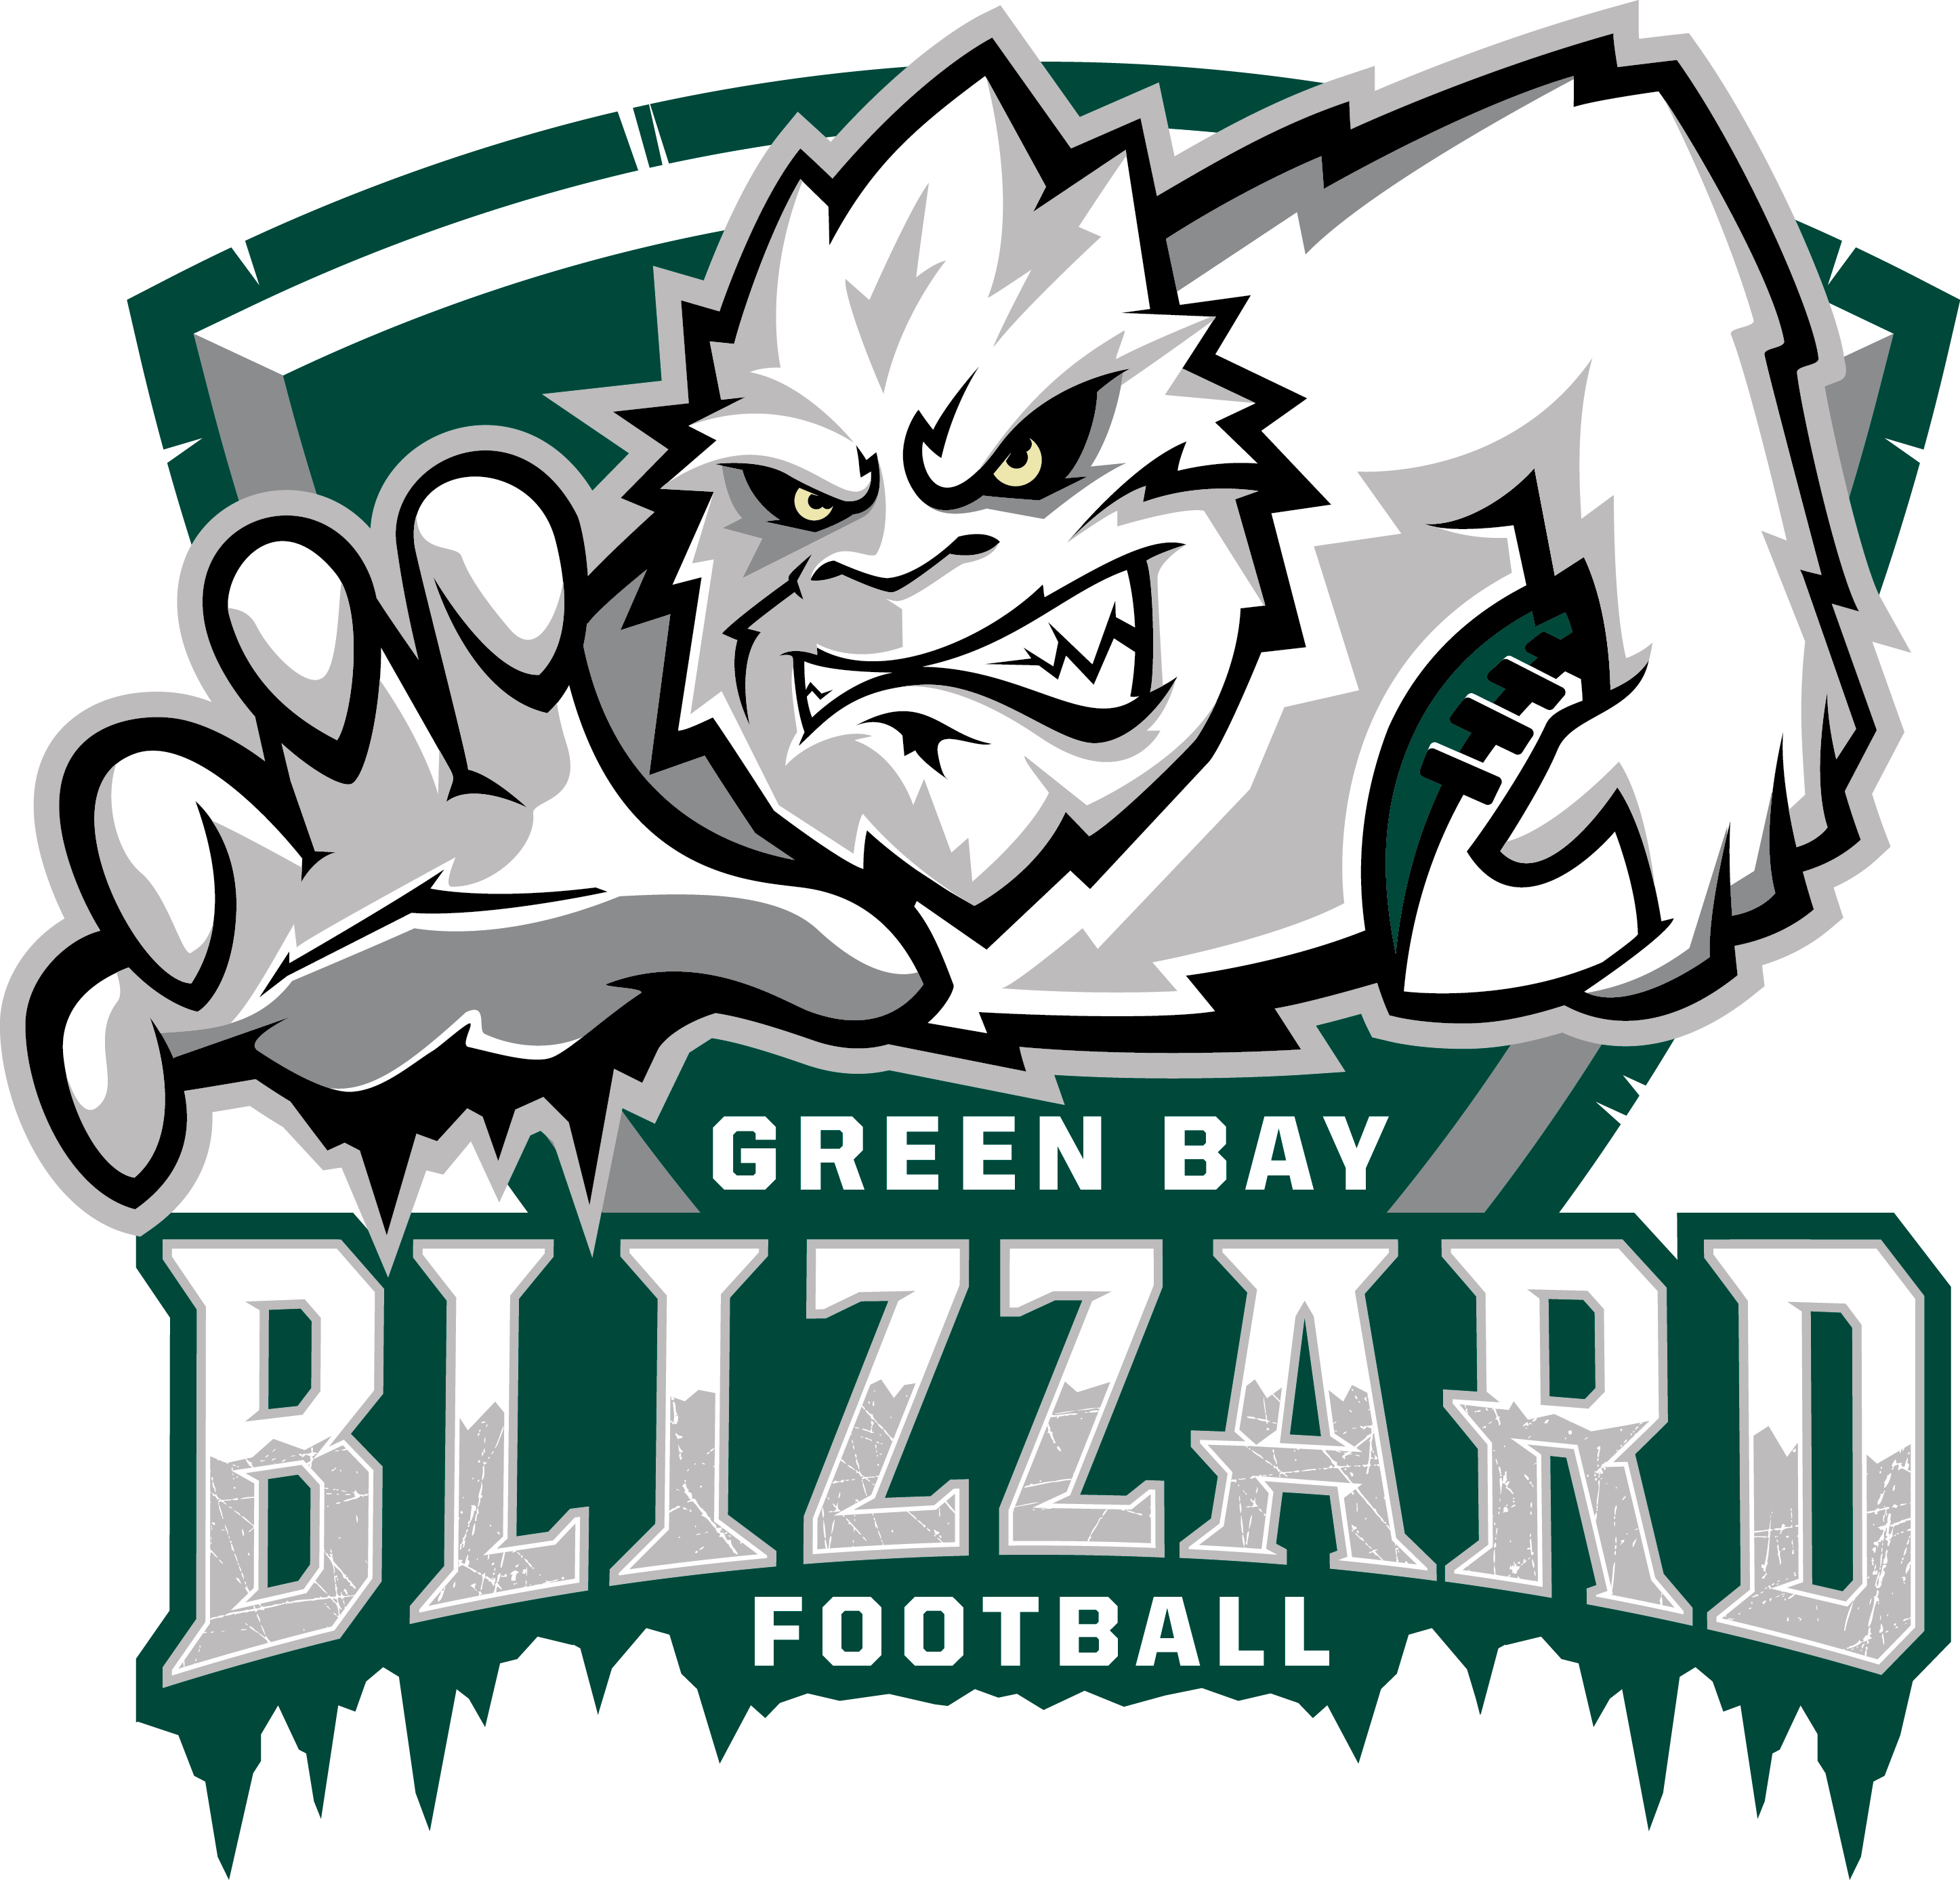 Green Bay Blizzard Football